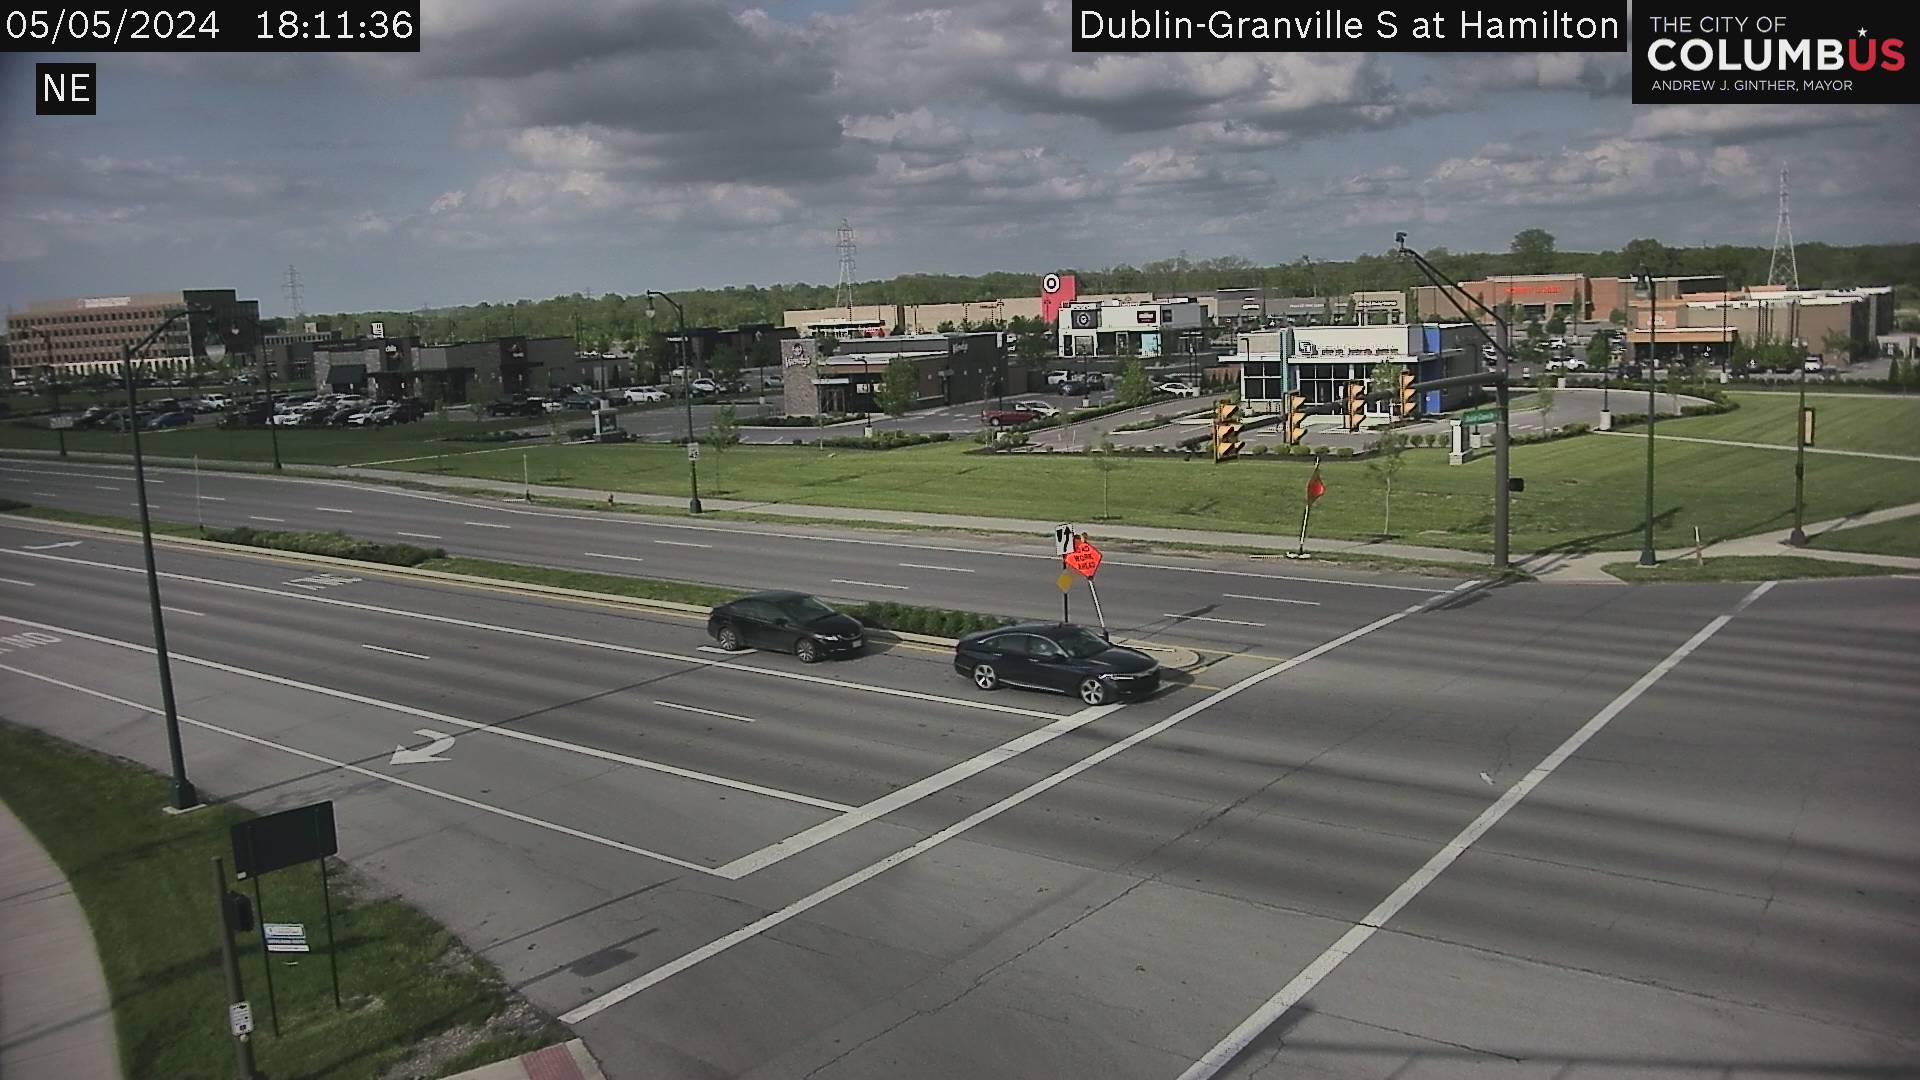 New Albany: City of Columbus) Hamilton Rd at Old Dublin-Granville Rd Traffic Camera